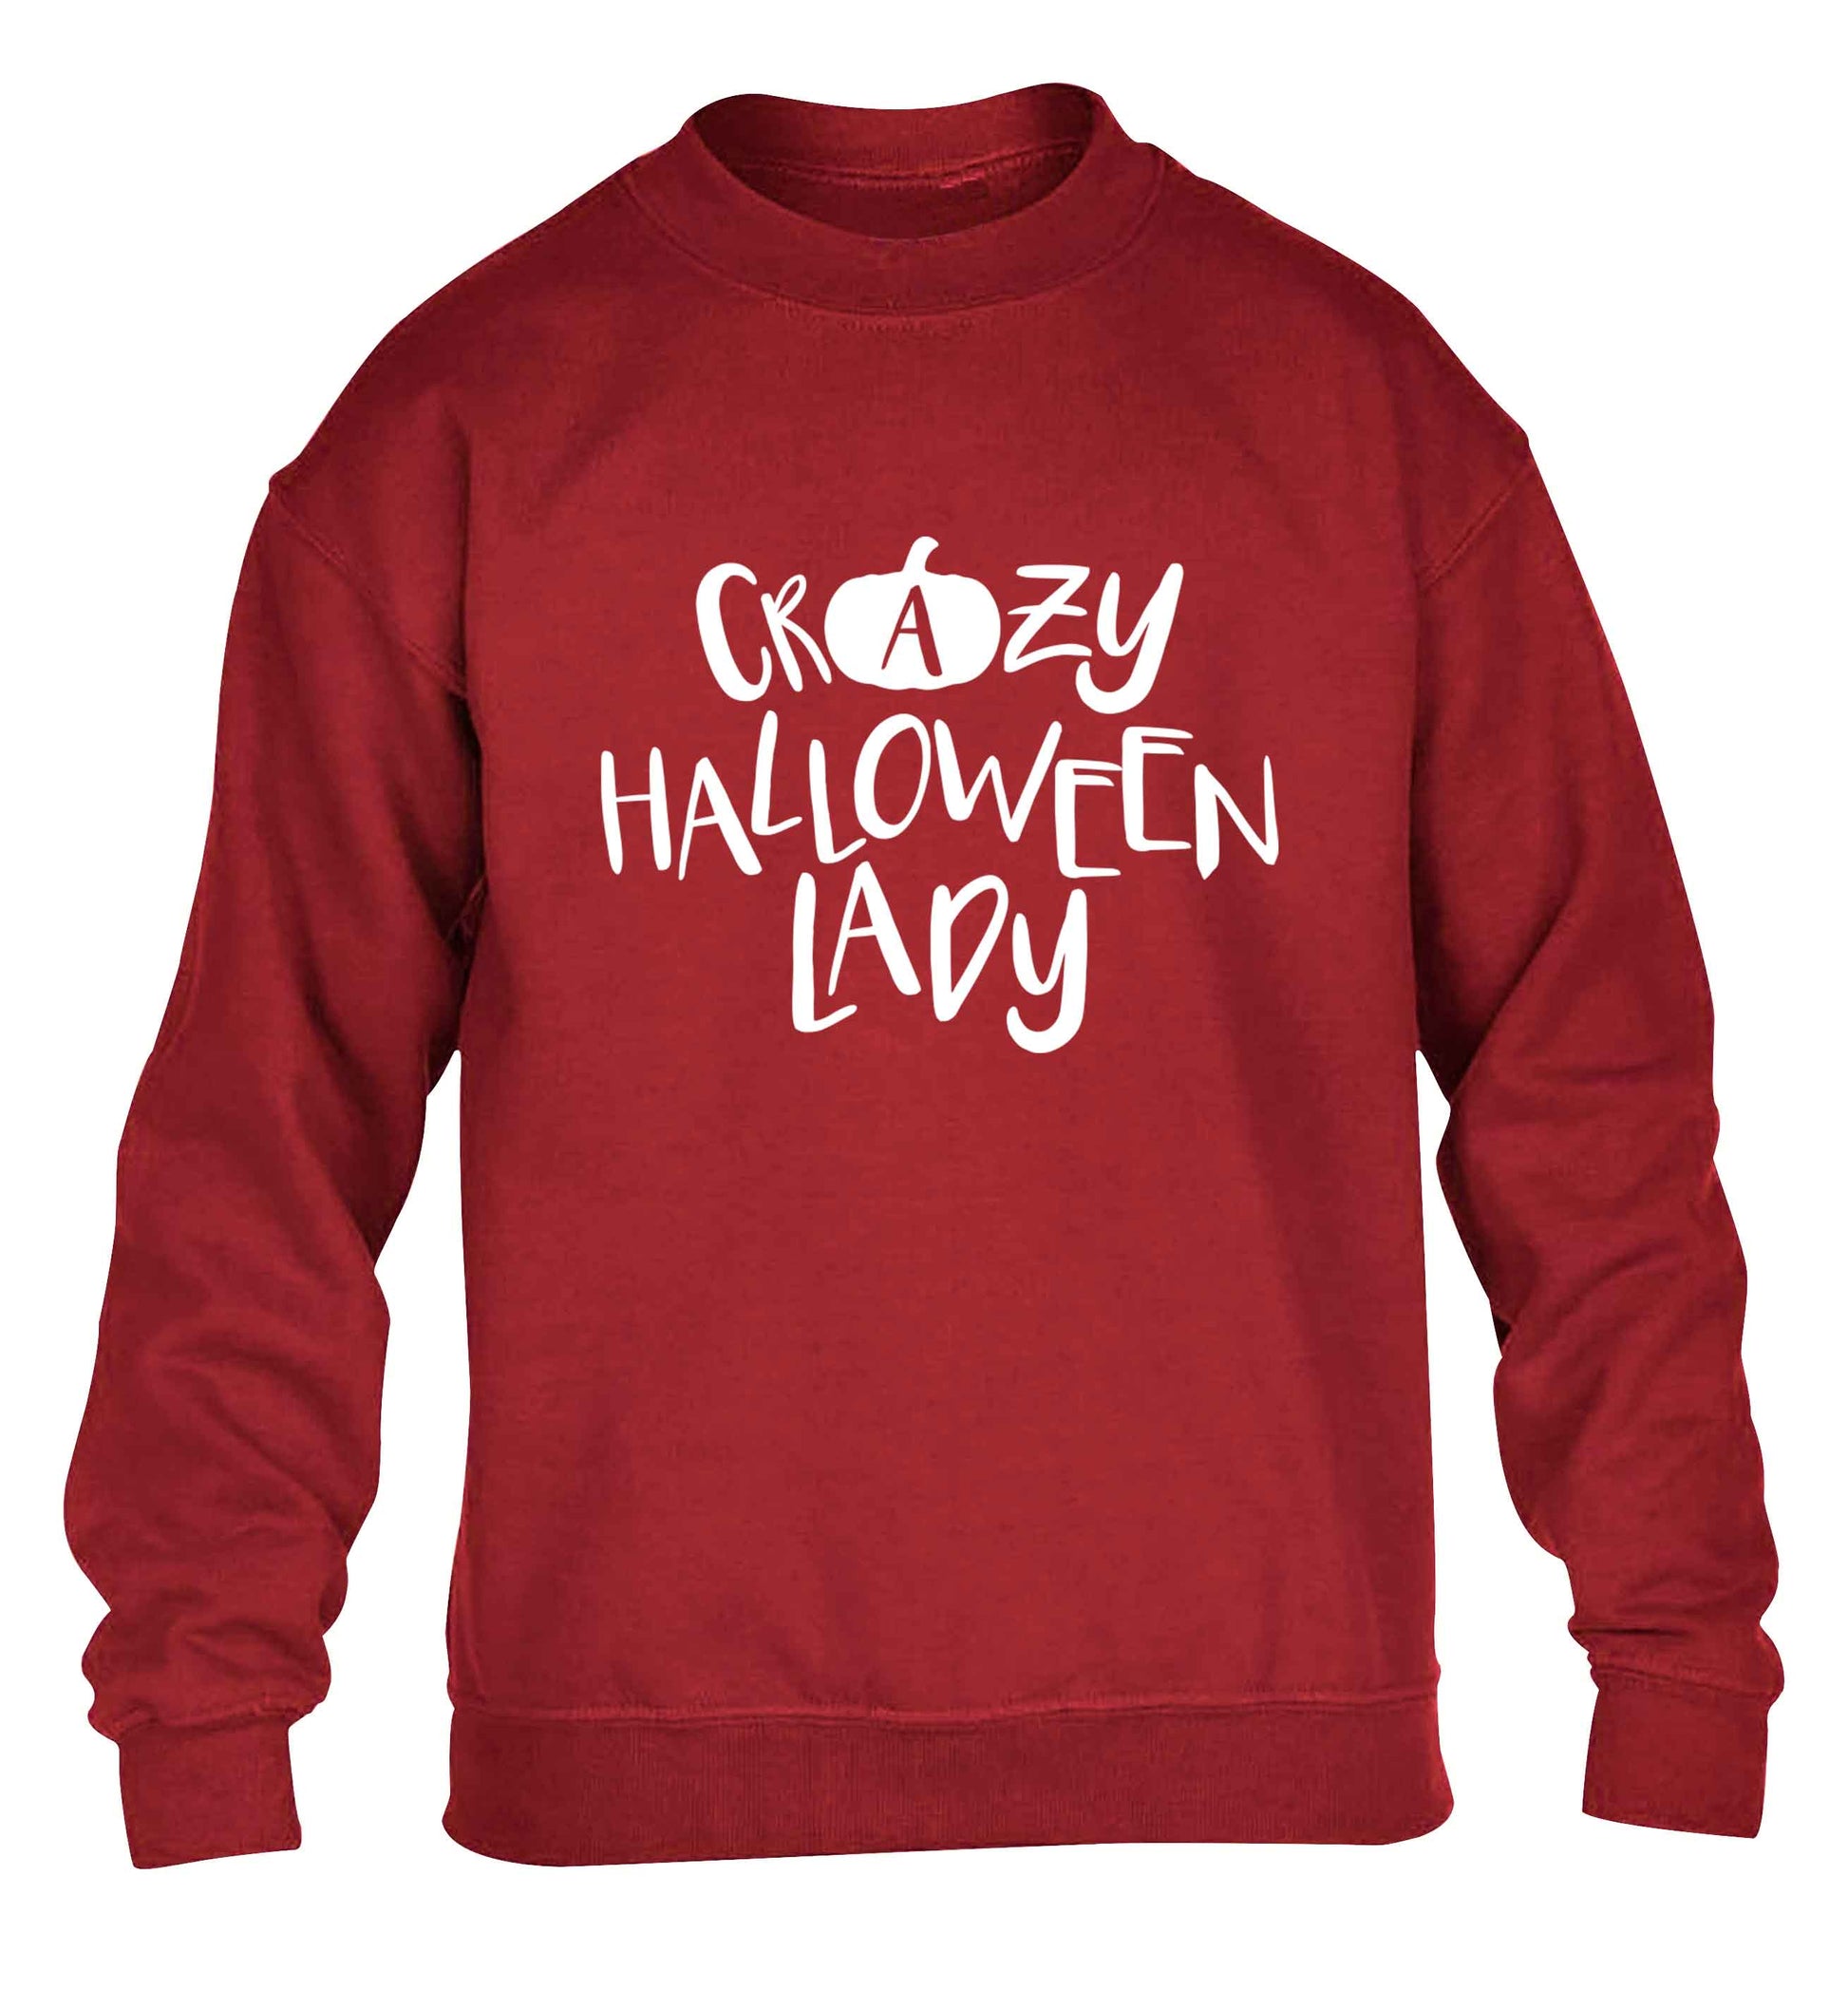 Crazy halloween lady children's grey sweater 12-13 Years